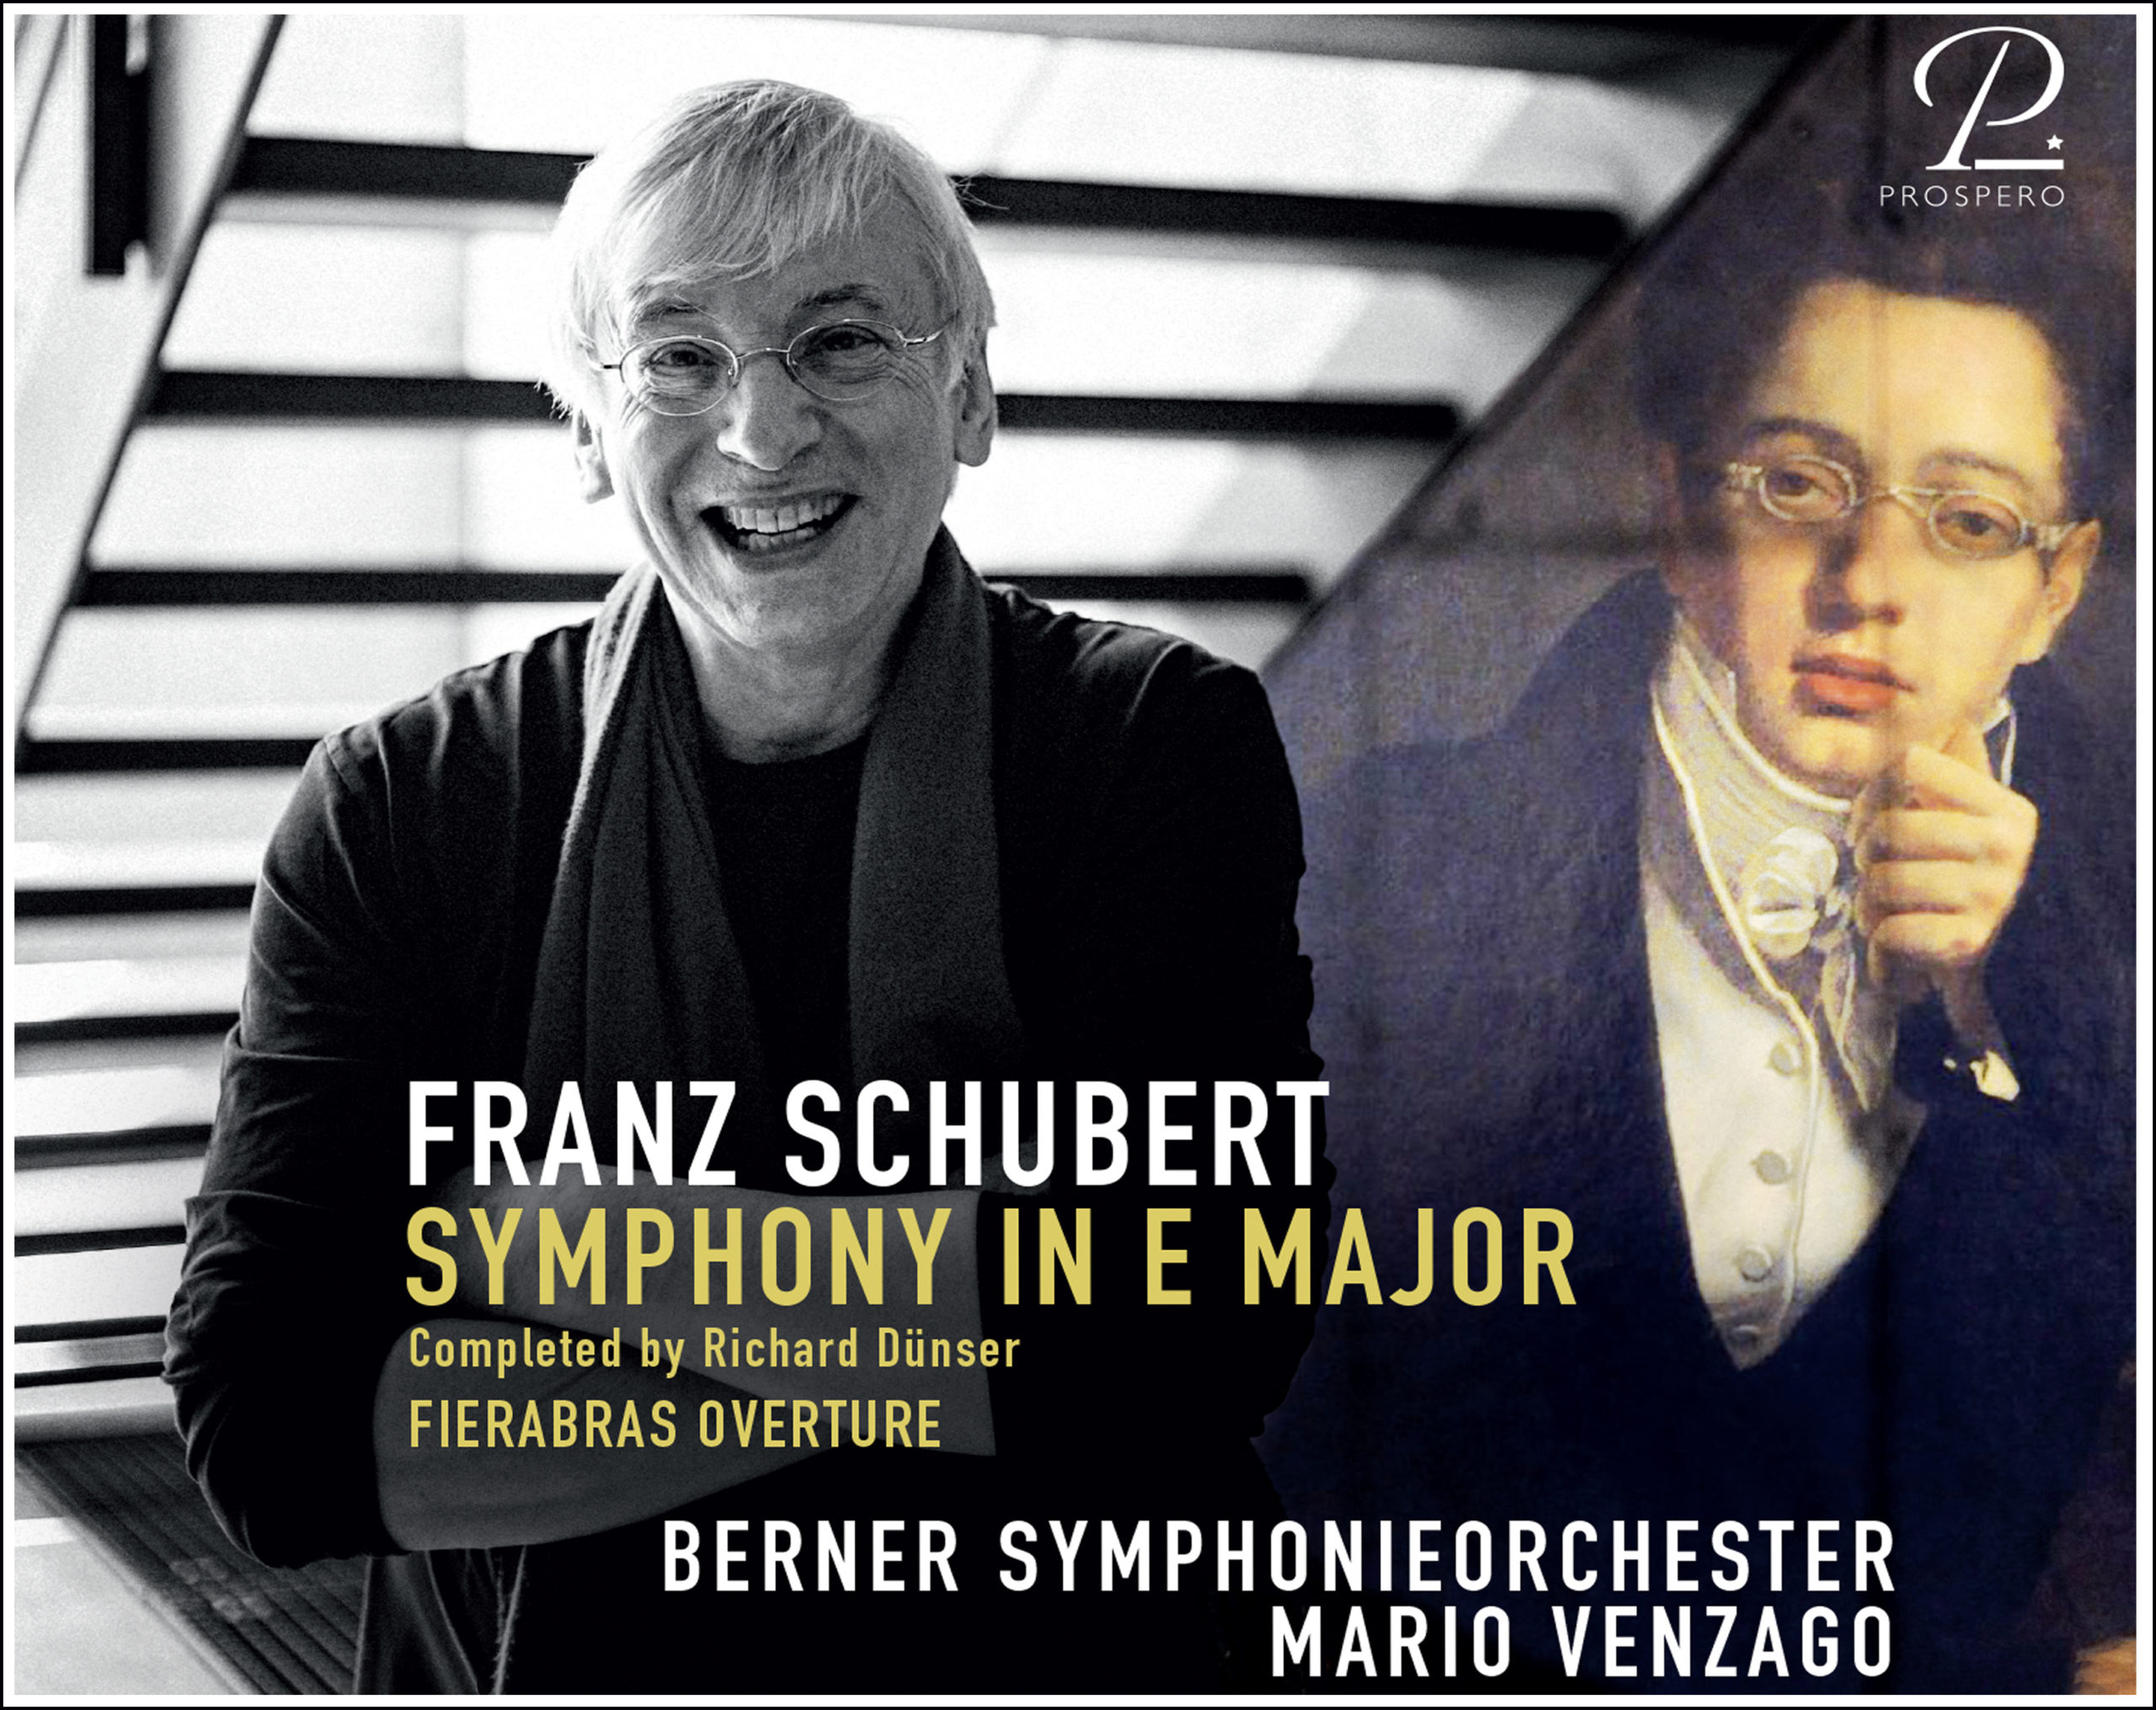 Schubert: Symphony in E major - Cover Art